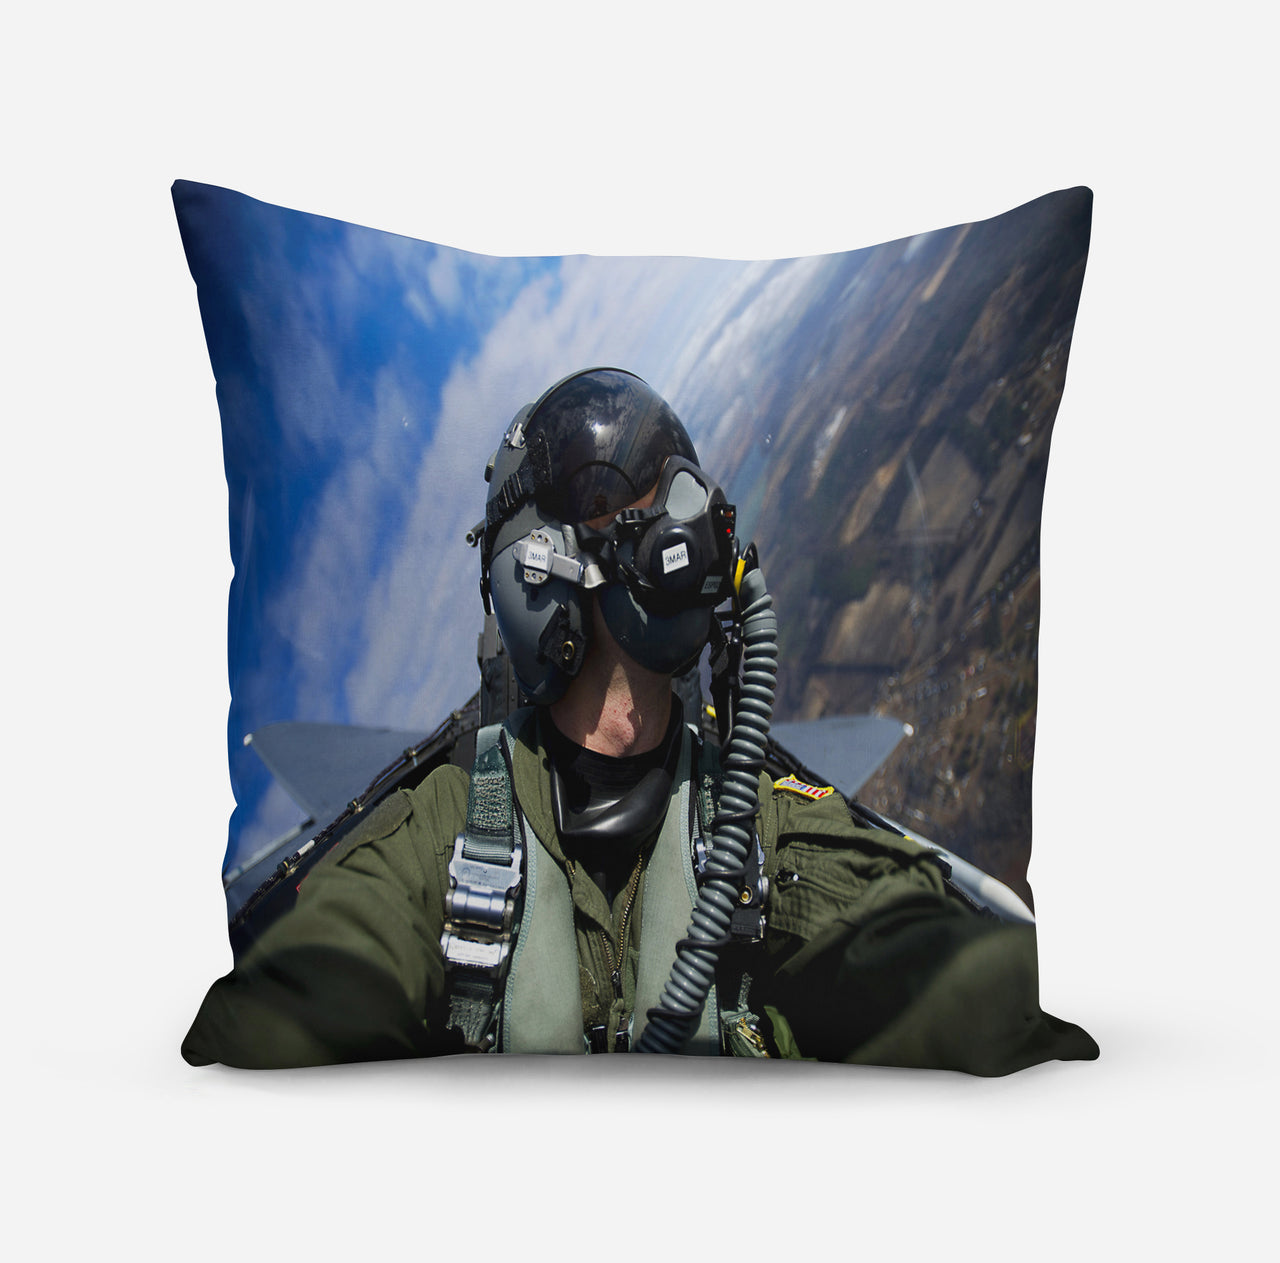 Amazing Military Pilot Selfie Designed Pillows